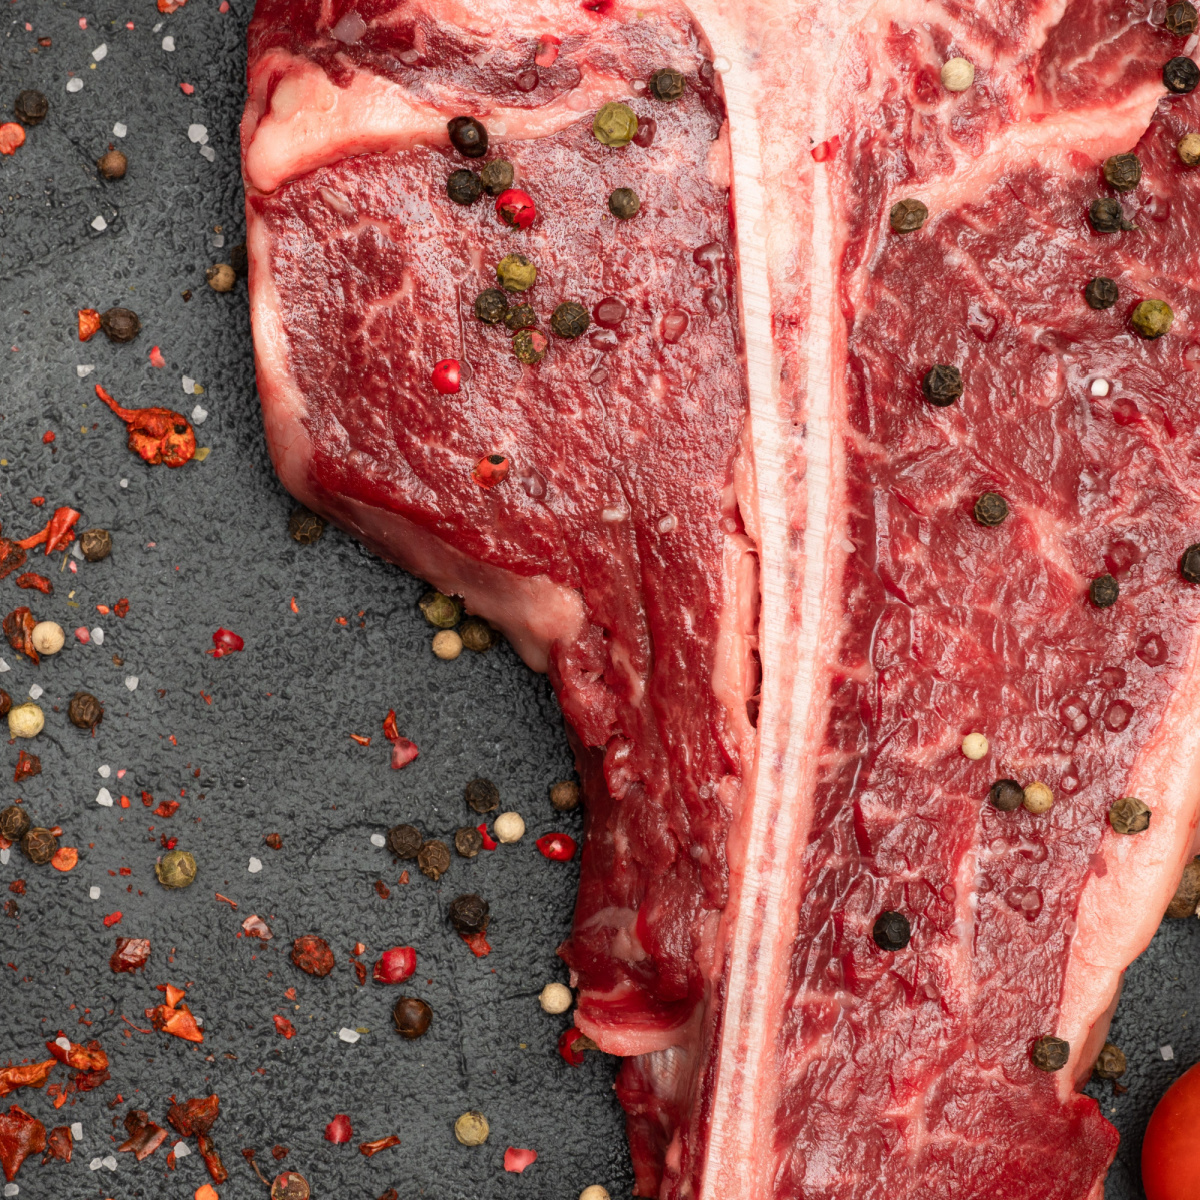 t-bone or porterhouse steak can be called a cowboy steak